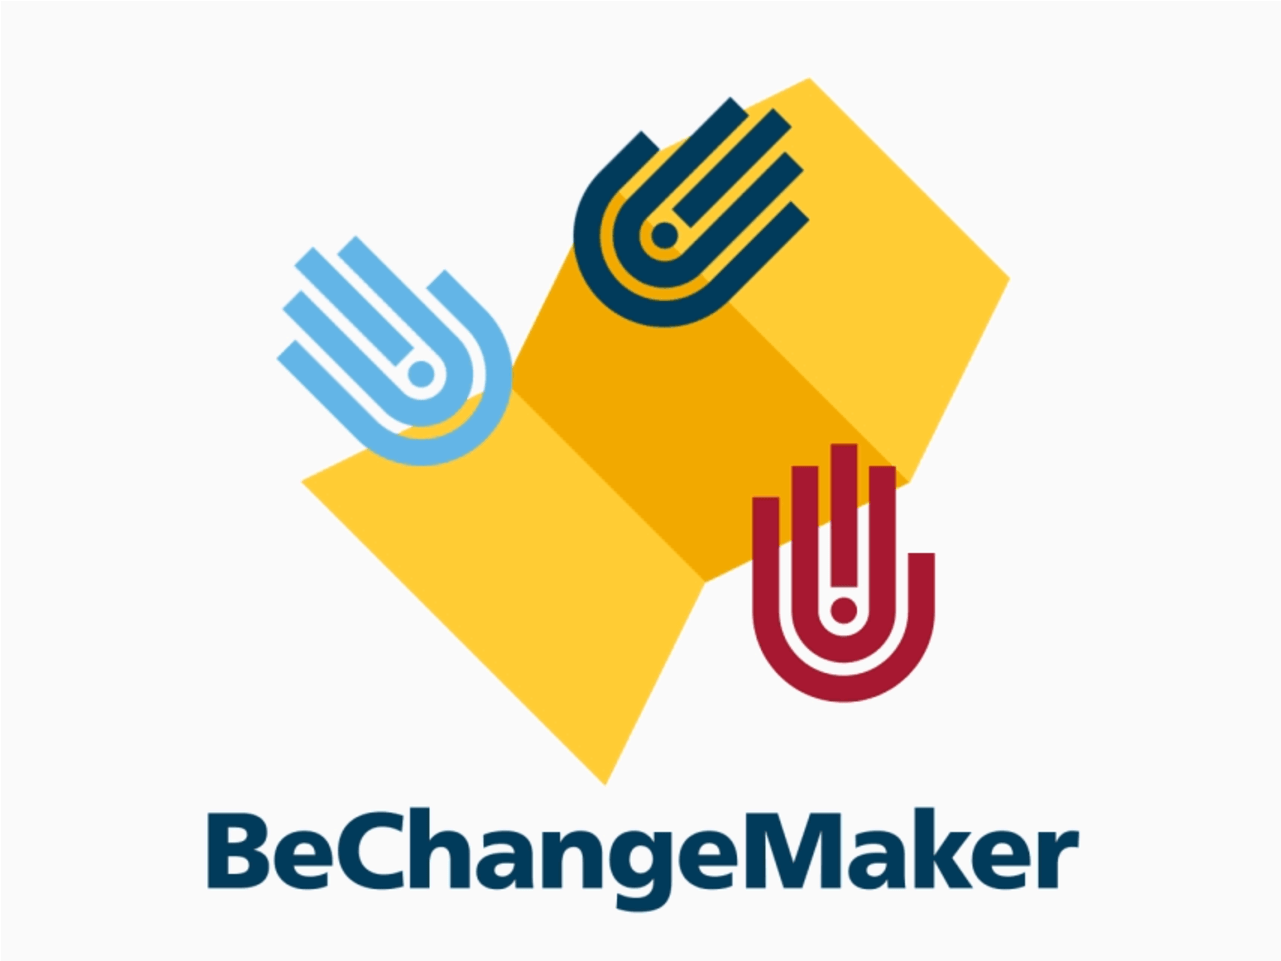 Be a change maker